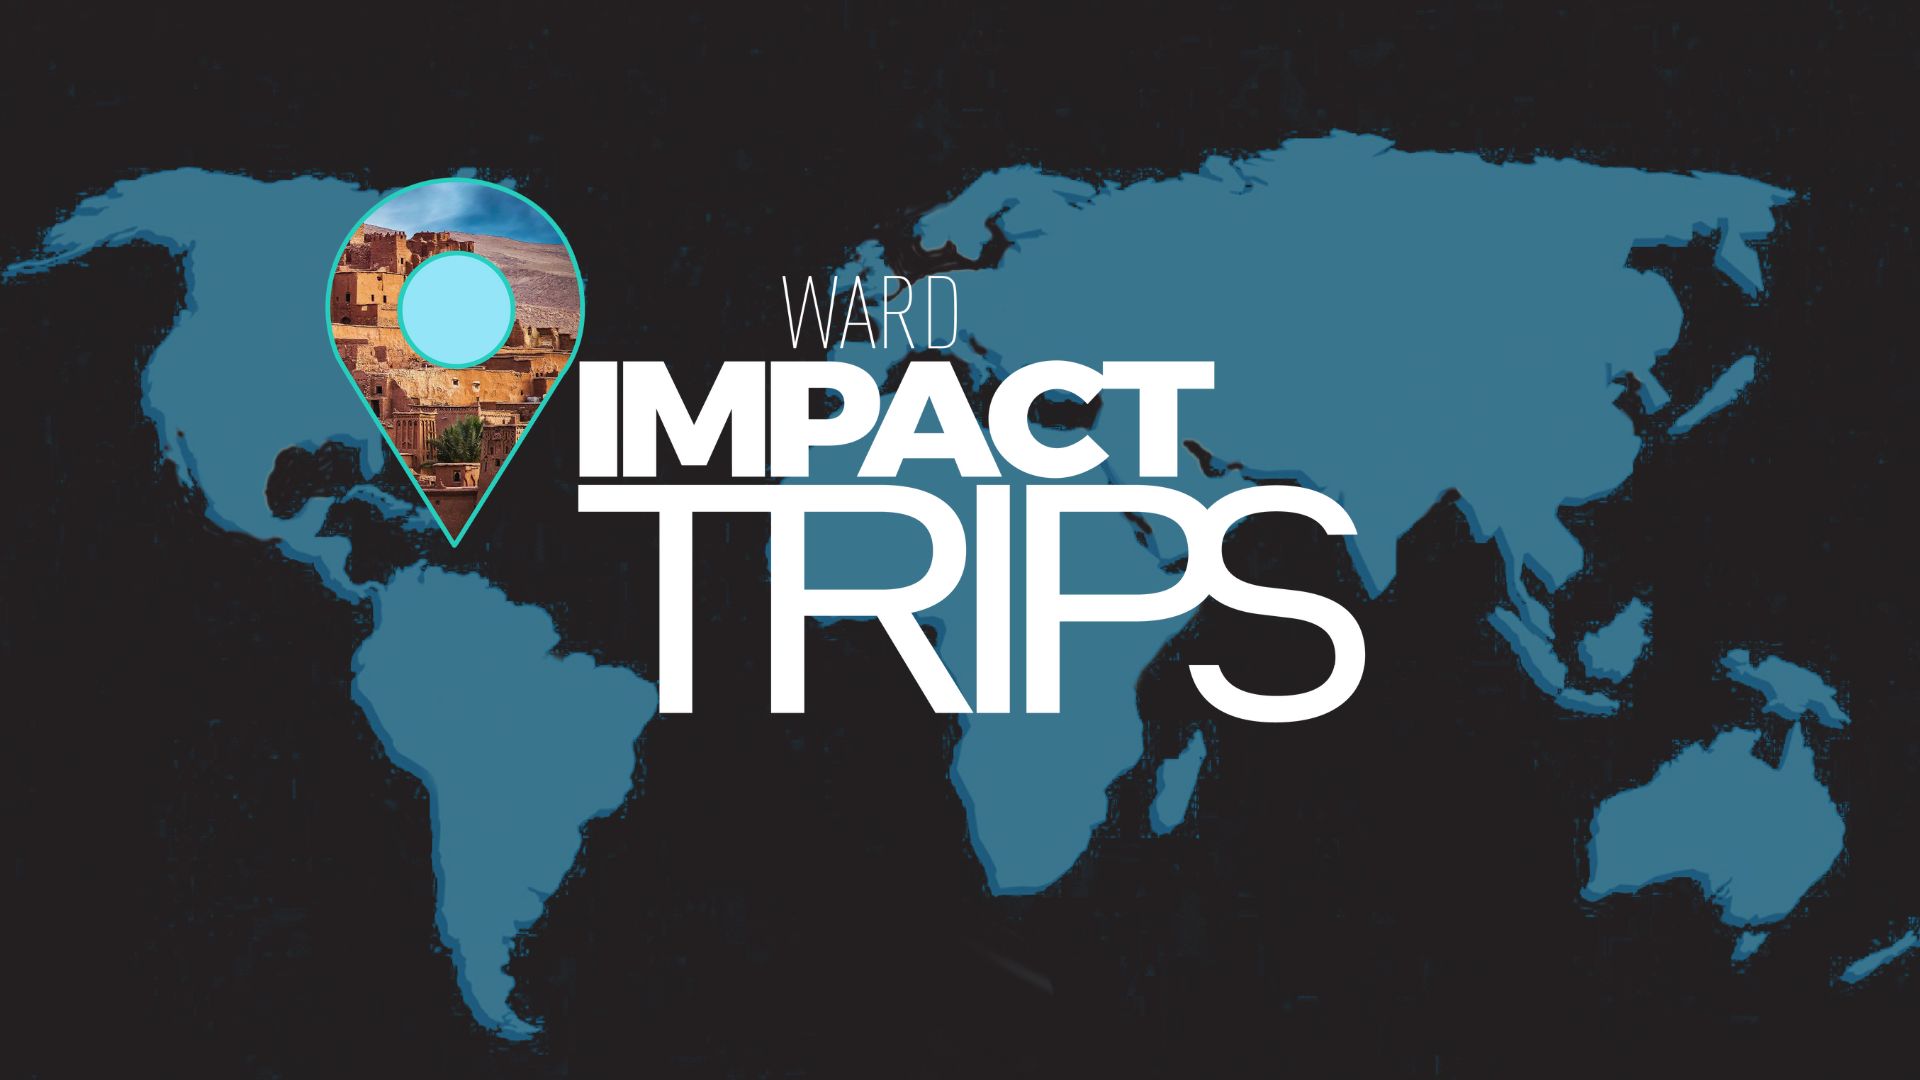 Impact trips